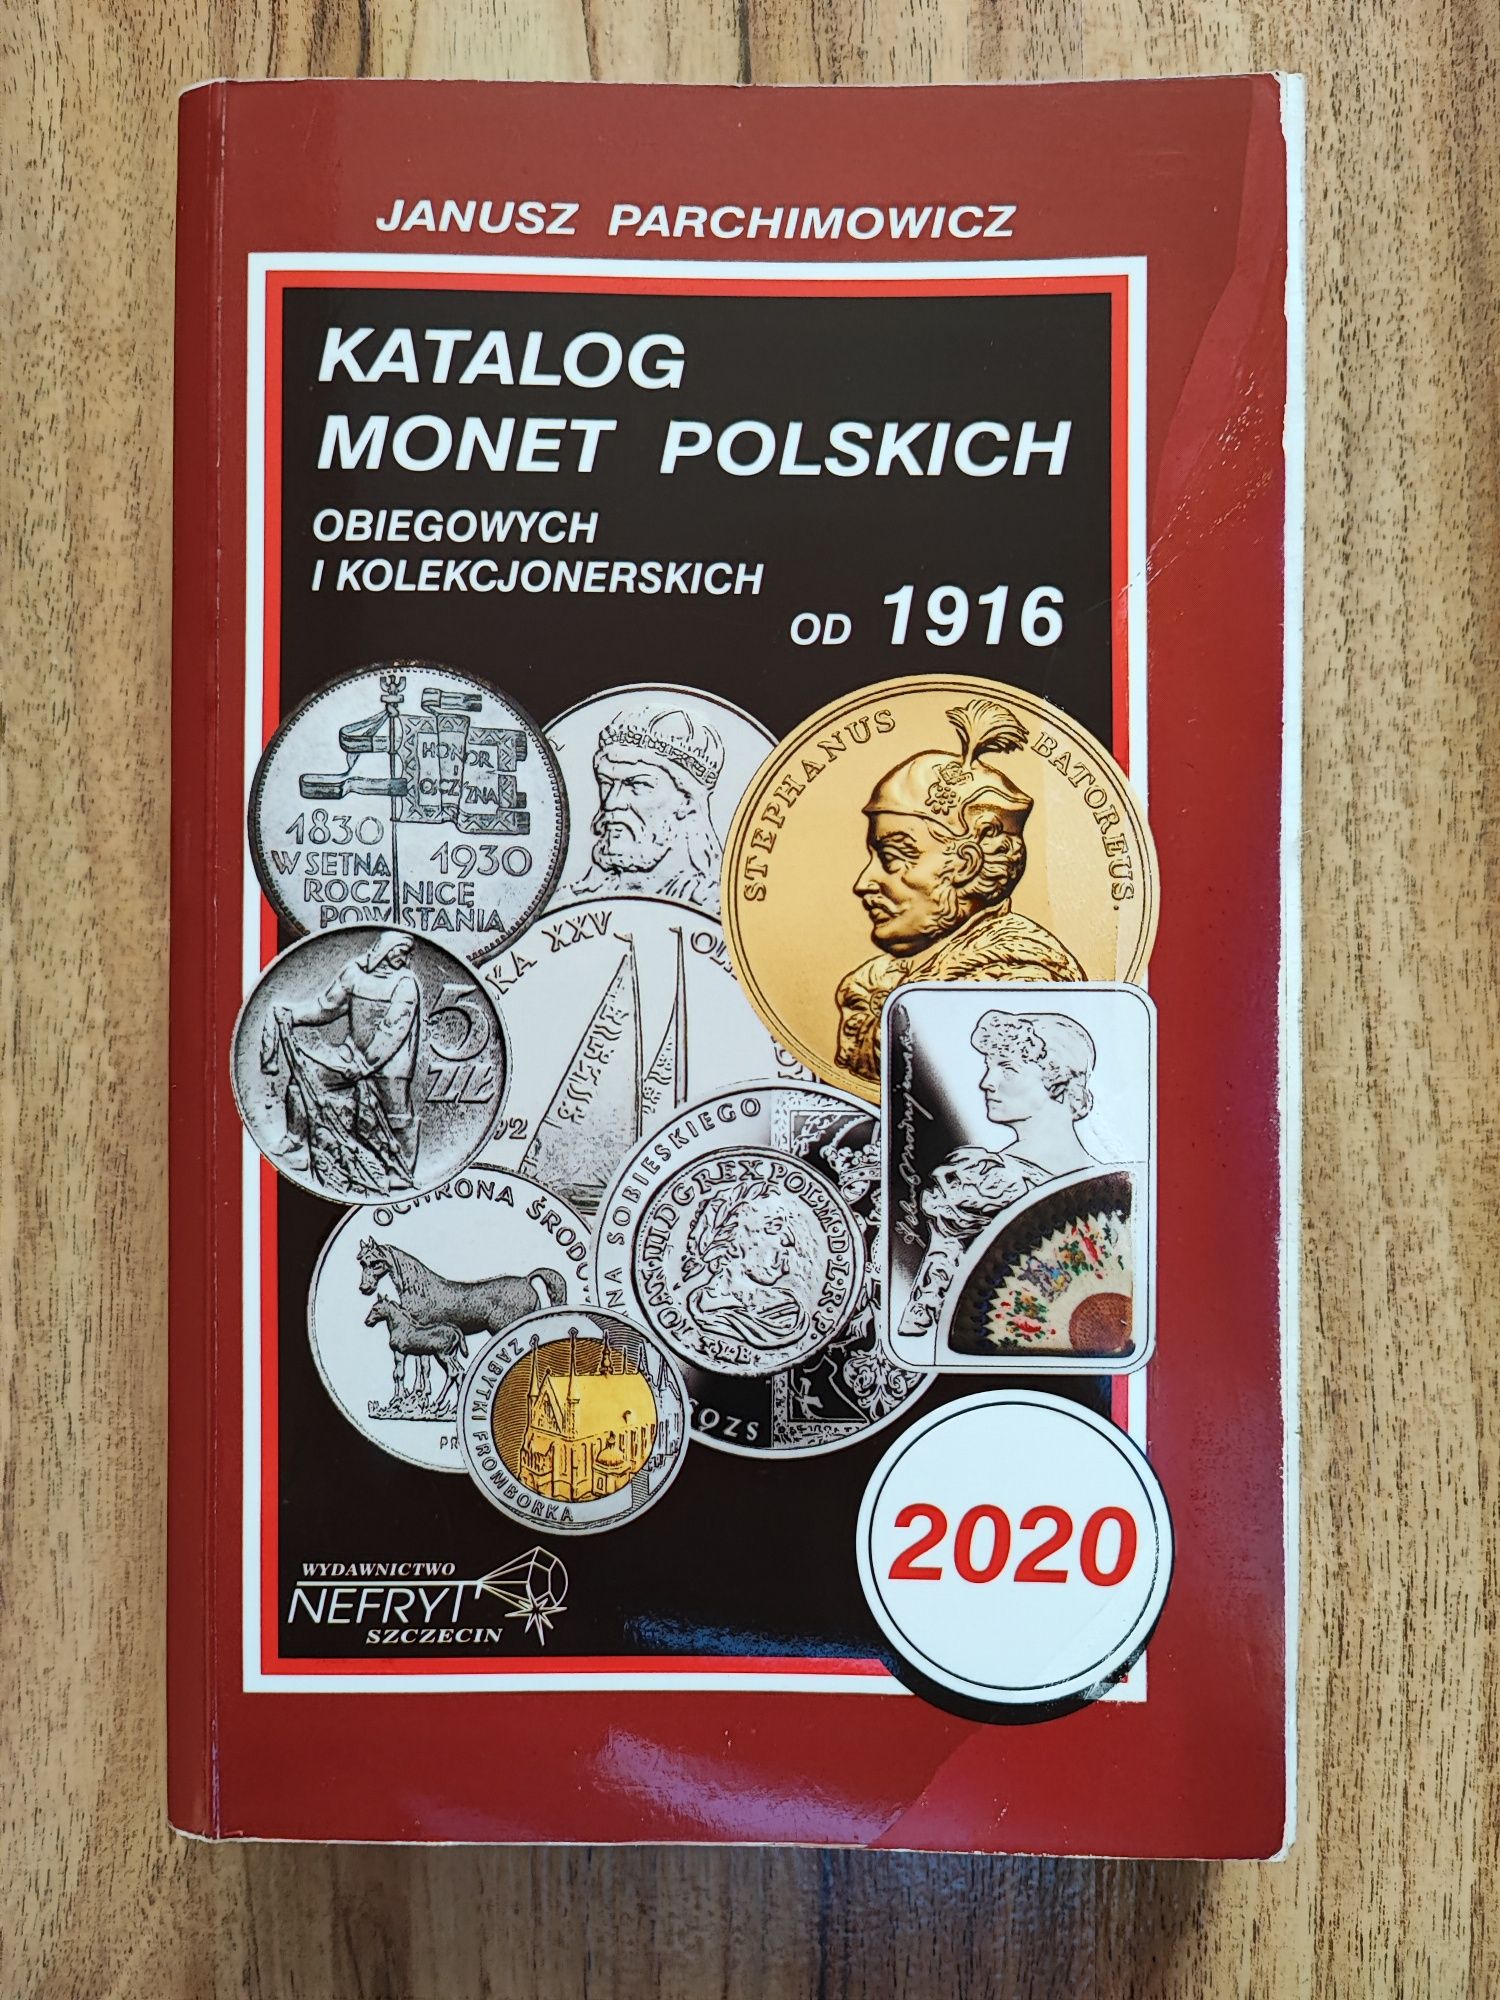 Katalog Monet Polskich 2020 Parchimowicz